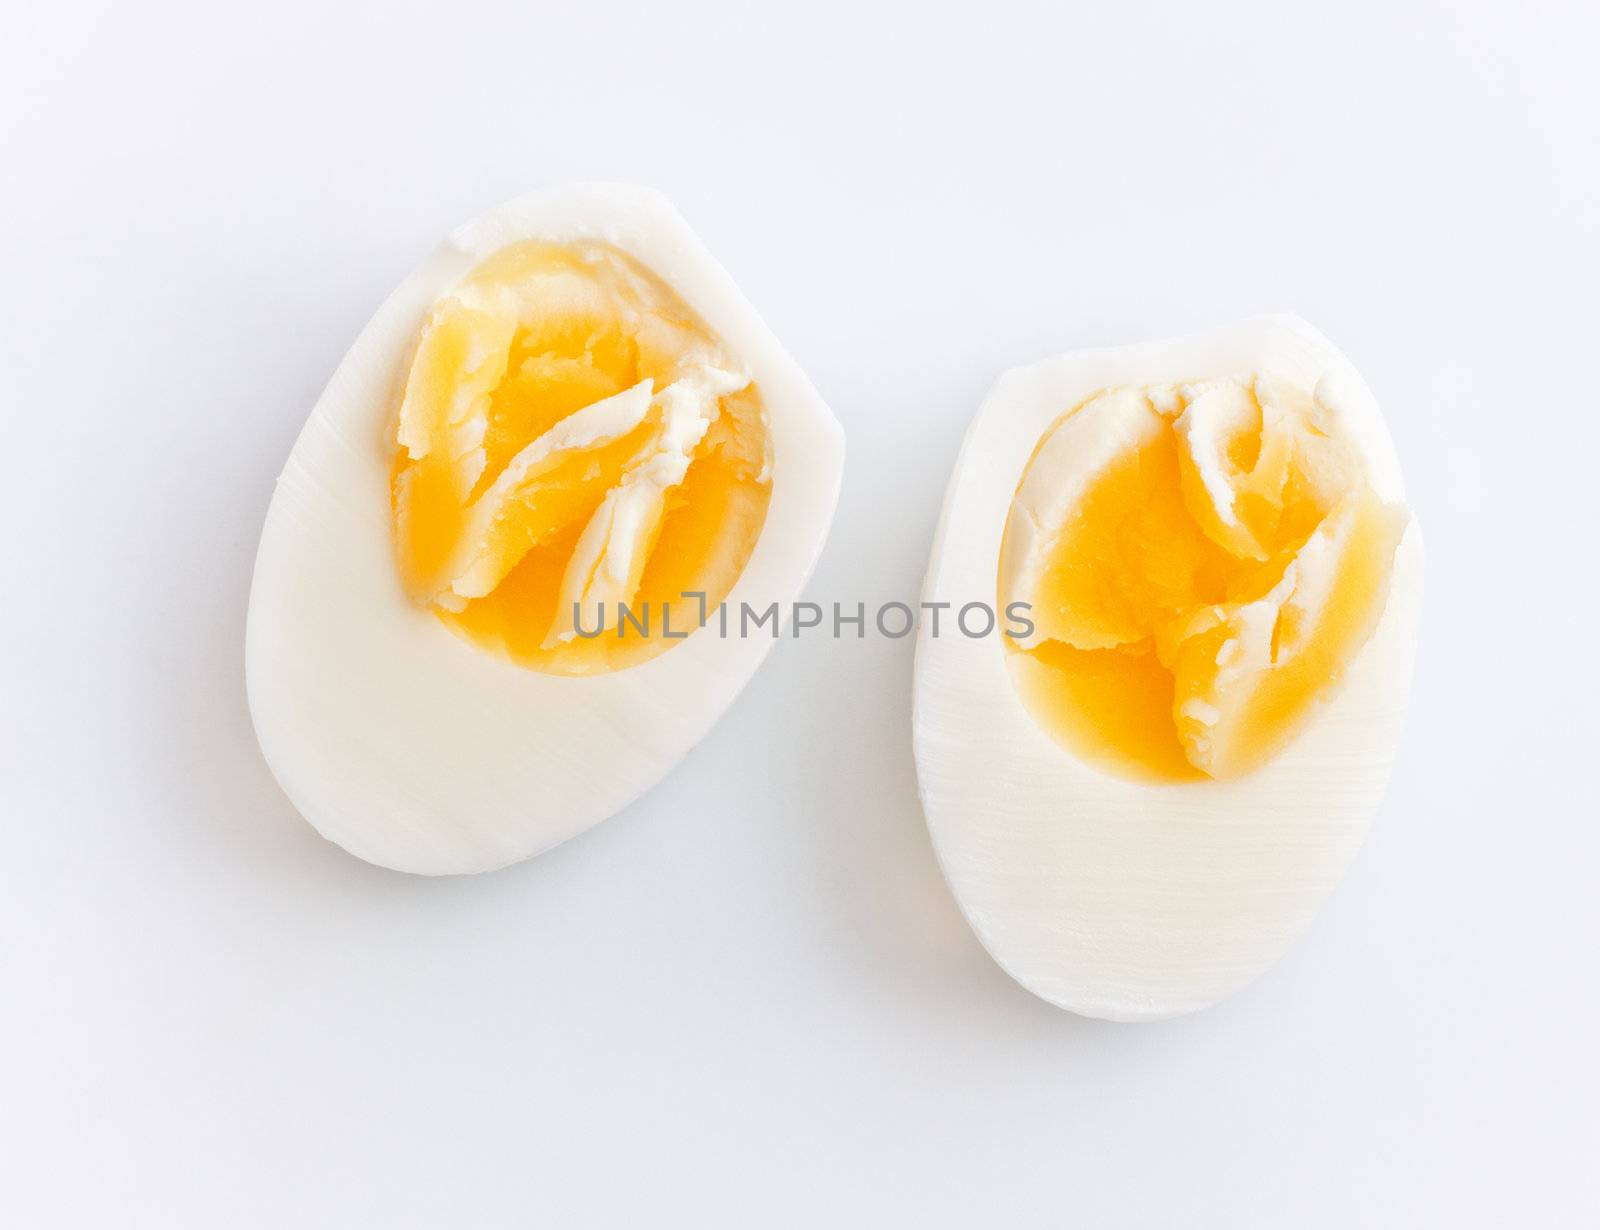 hard boiled egg sliced in half, gray background